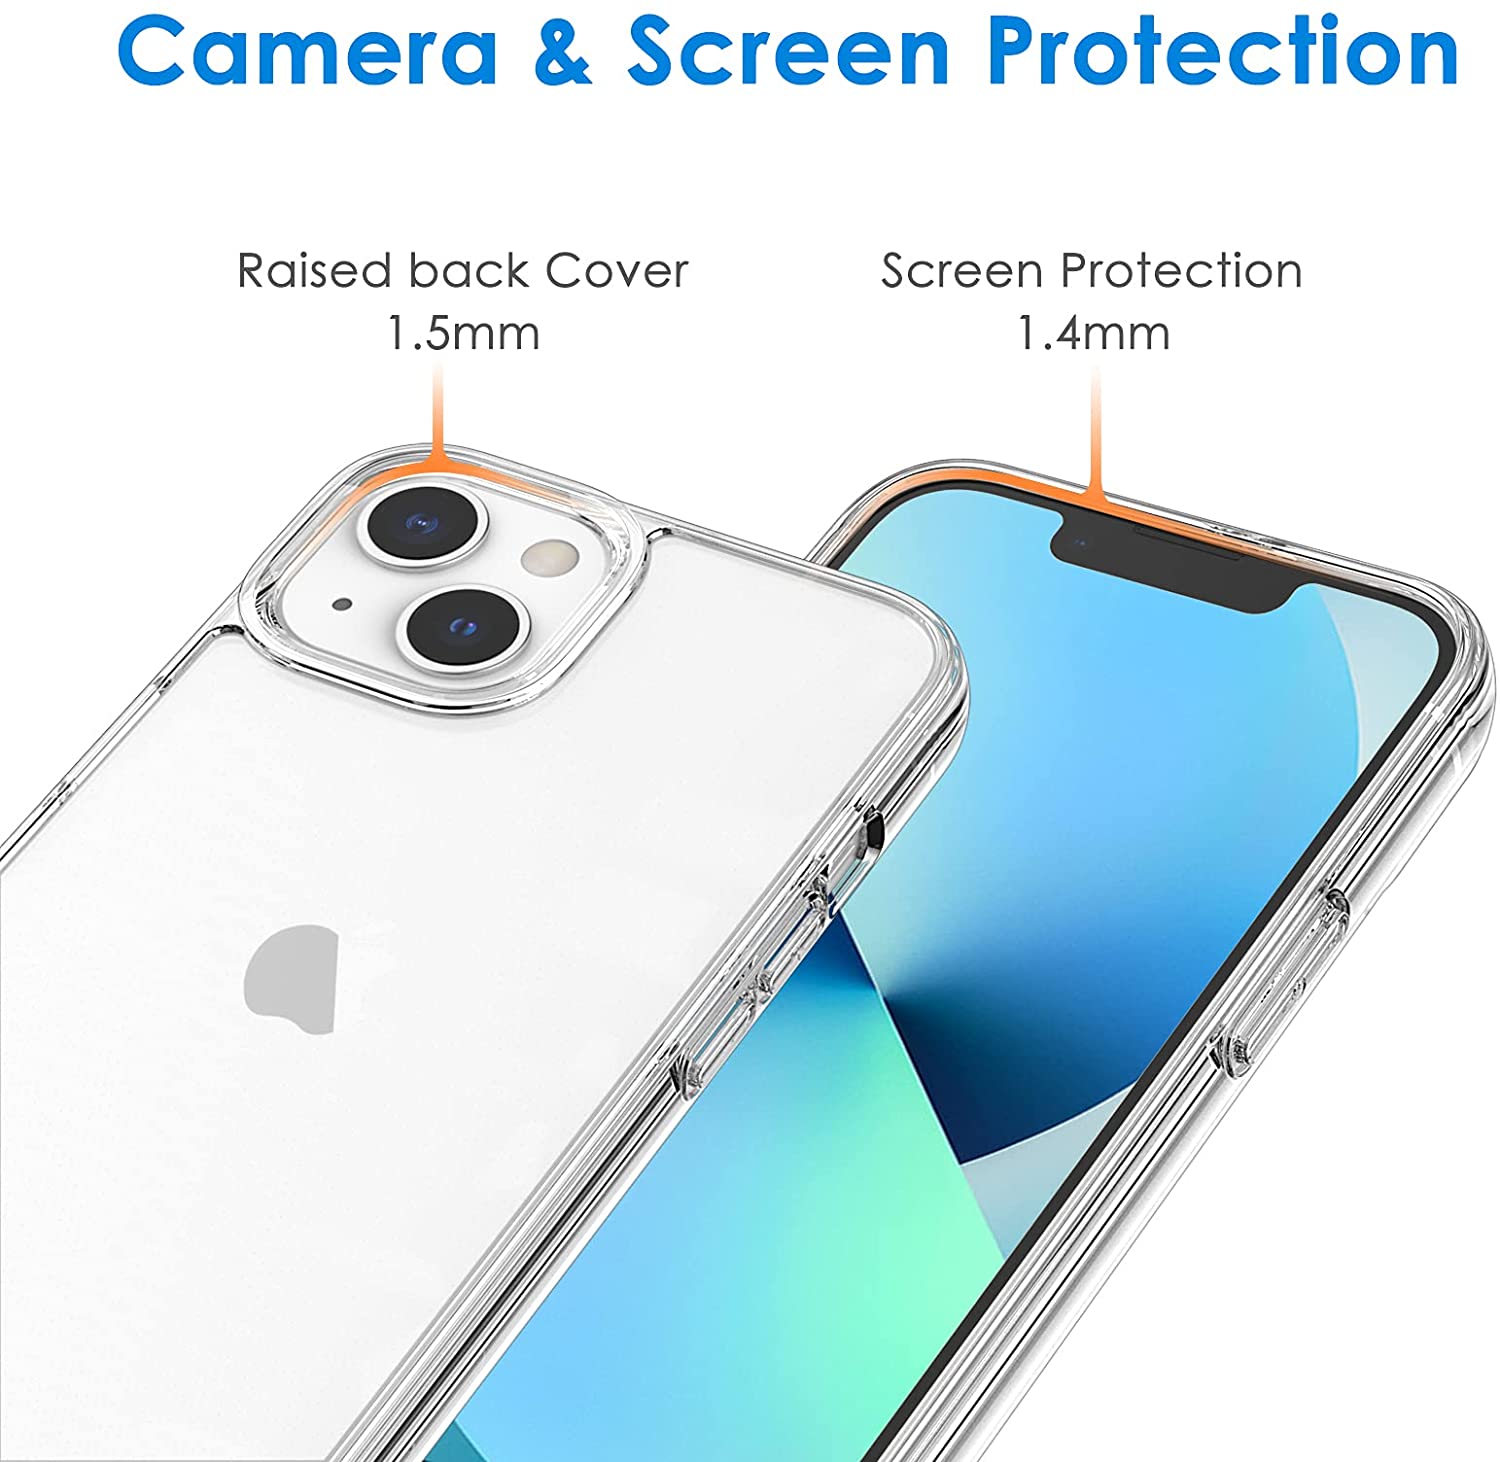 JETech iPhone 13 Series Cases & Screen Protectors: Case from $4.99, Screen Protectors from $3.99